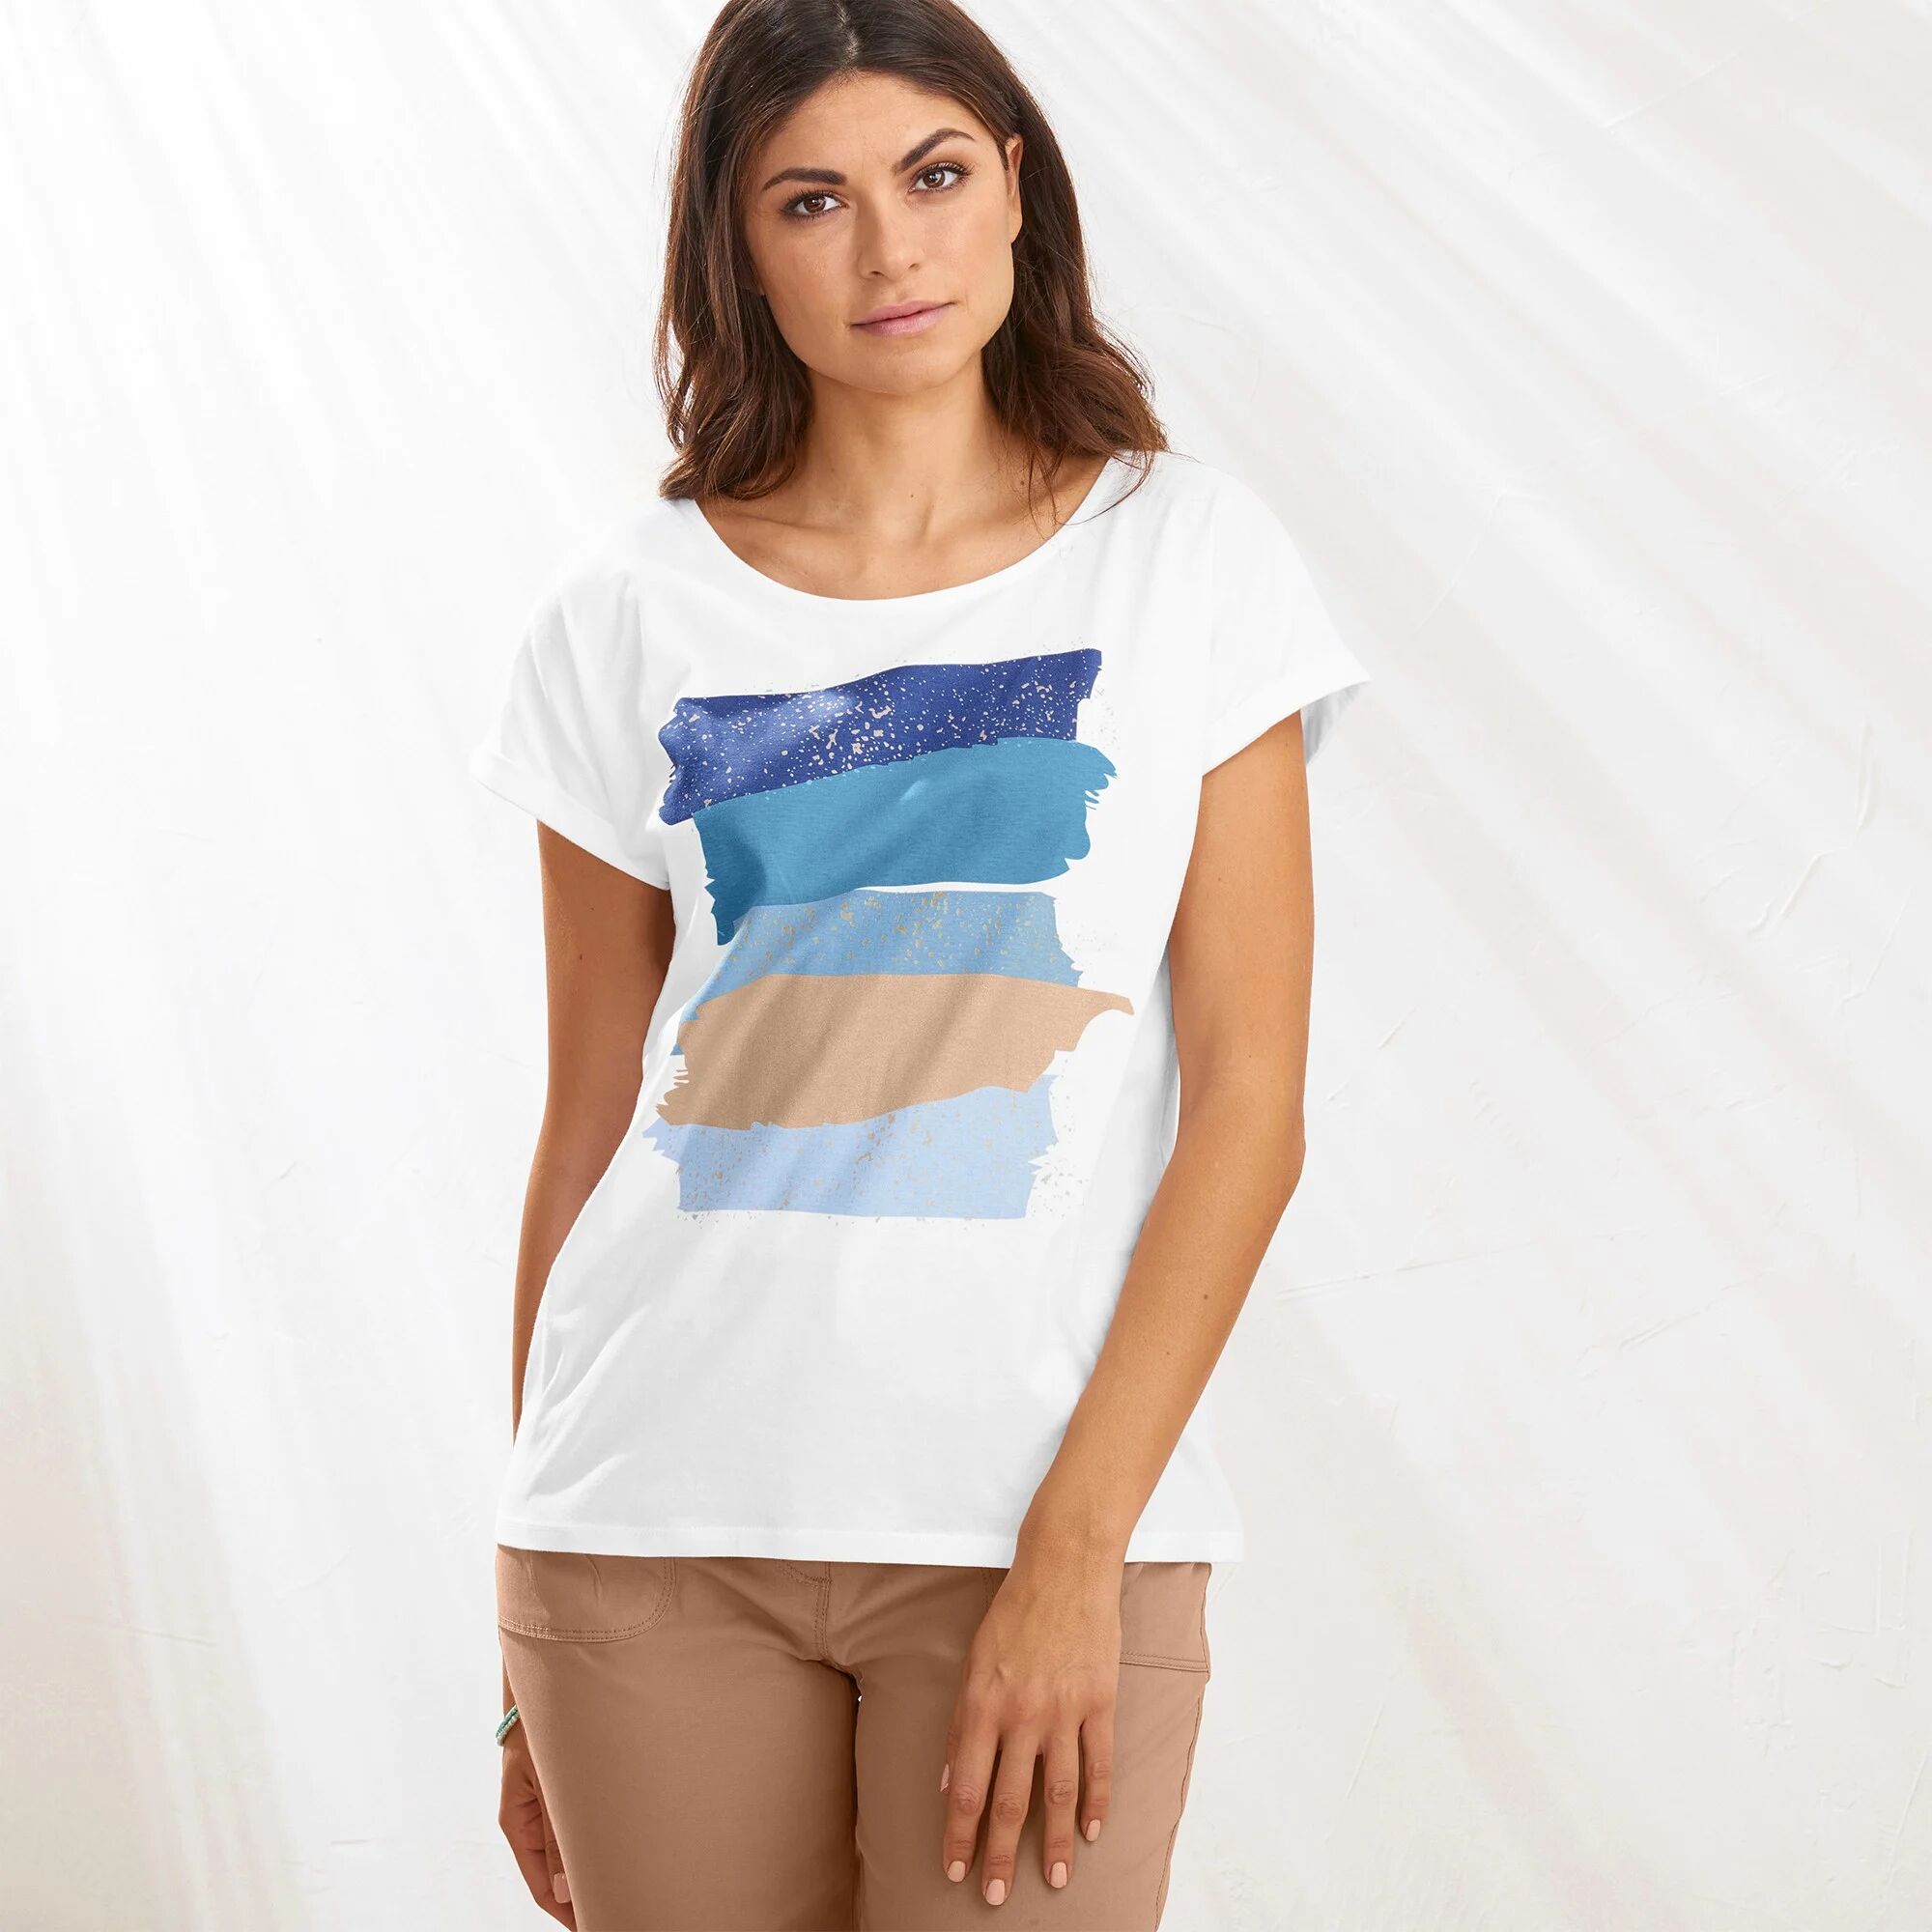 Blancheporte T-shirt Boite Imprimé "arty", Maille Jersey - Femme Bleu 52